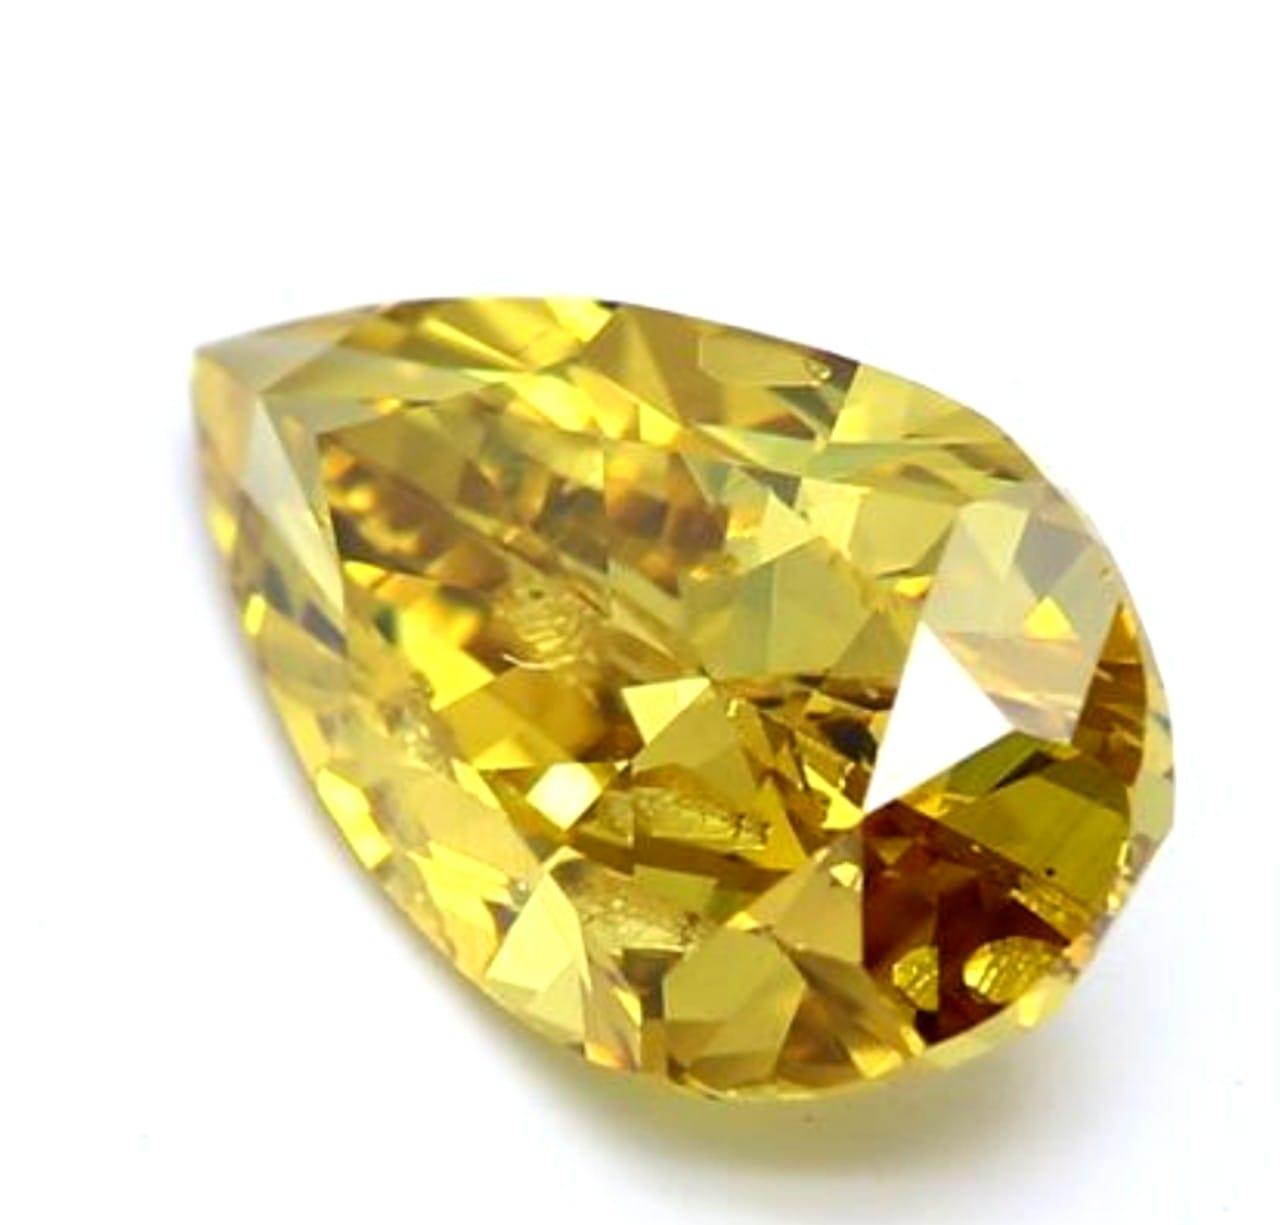 1.01 Carat Fancy Deep Yellow Pear Cut Diamond GIA Certified For Sale 2